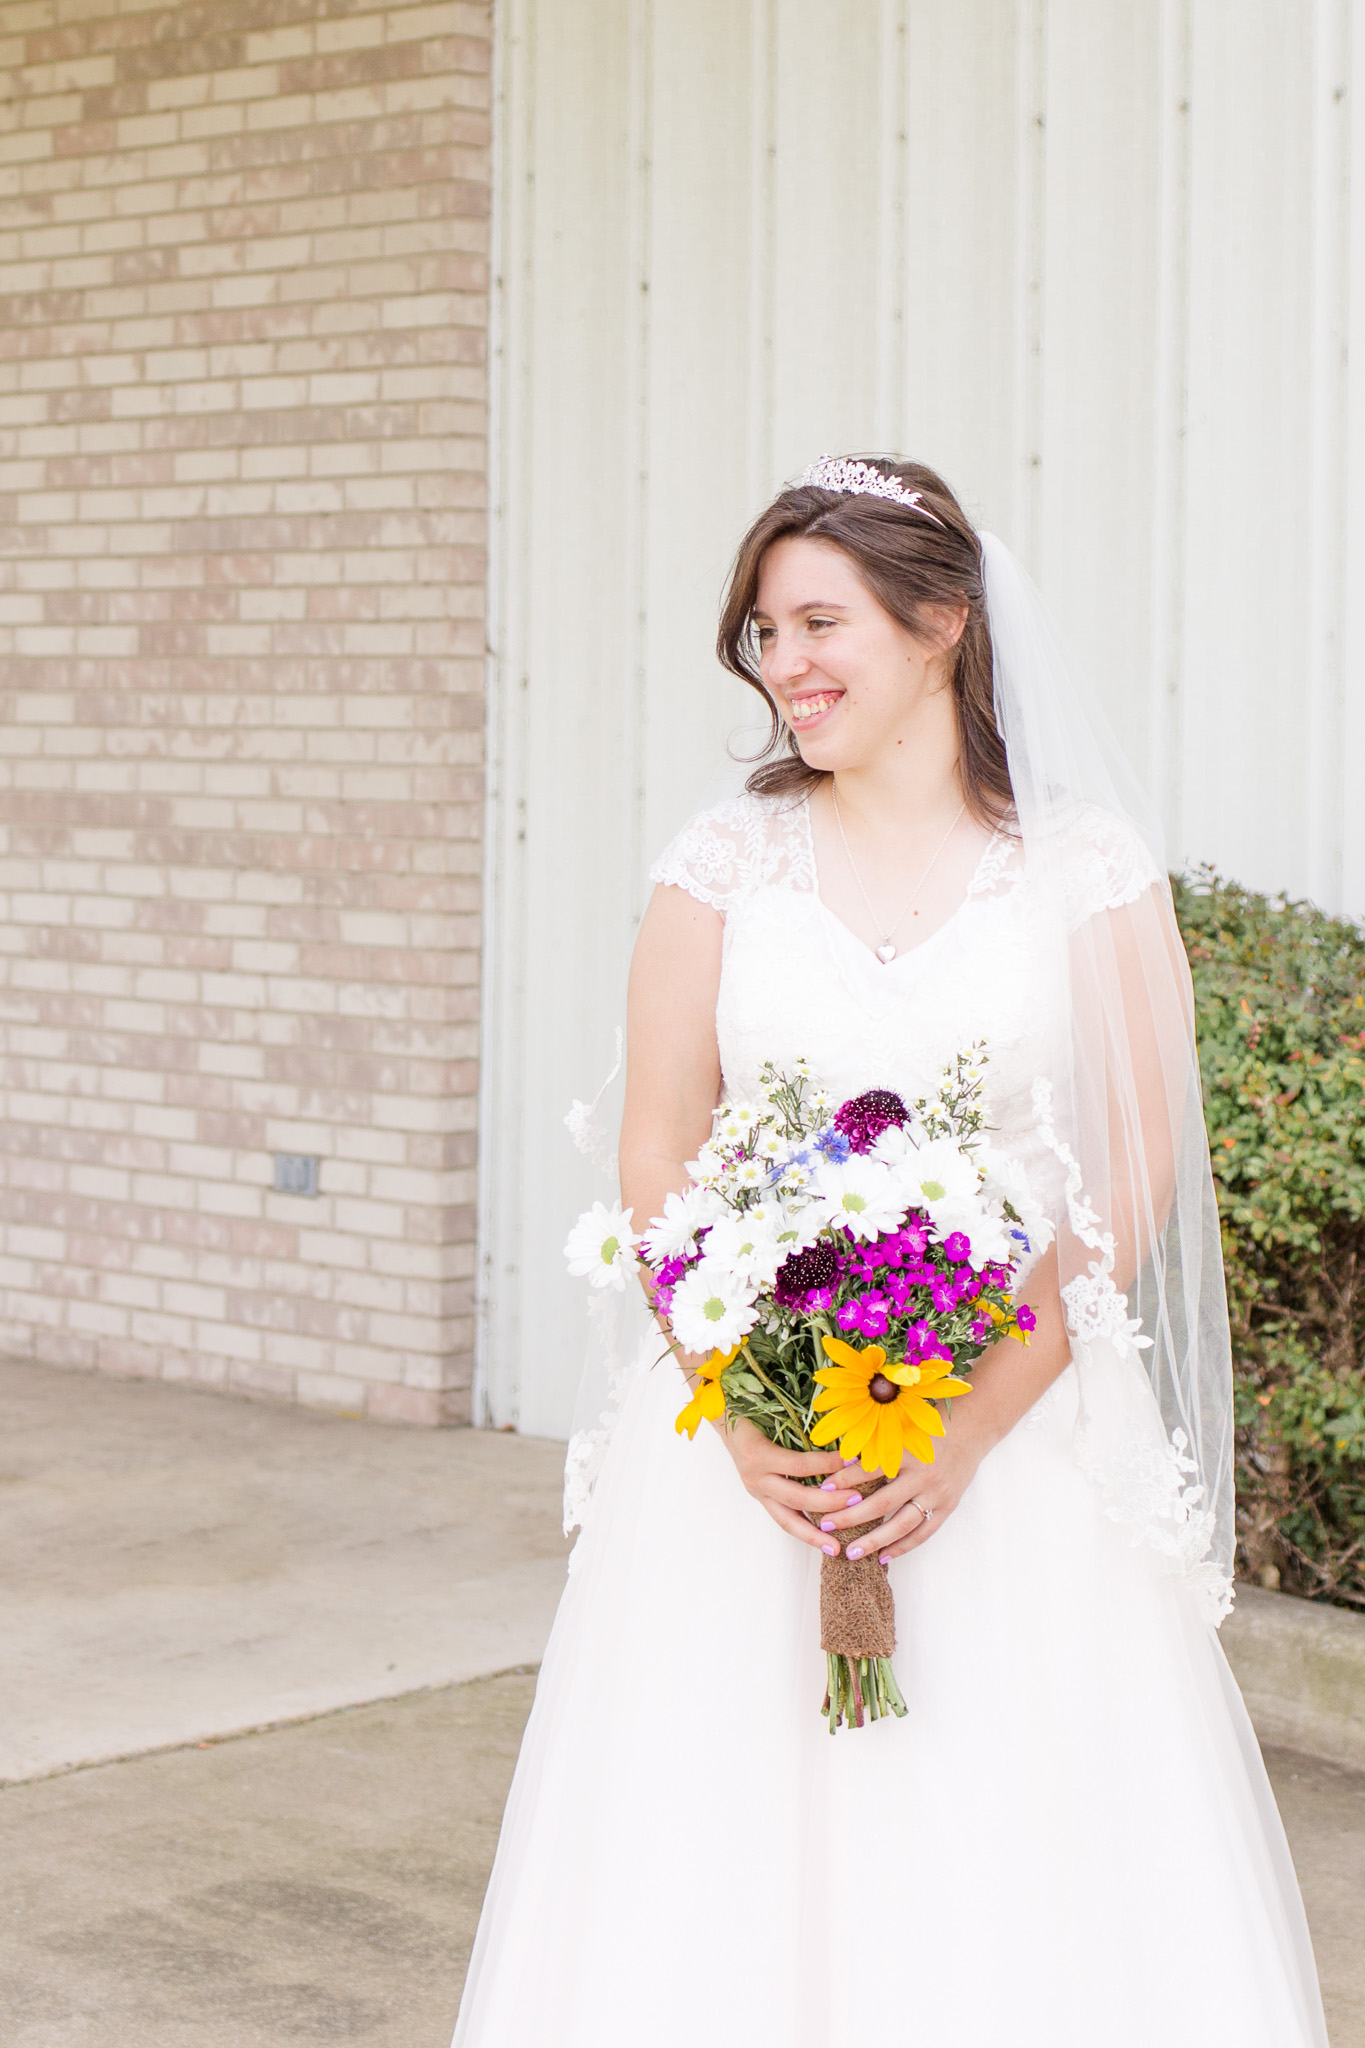 Beaded blush wedding dress and wildflower wedding bouquet